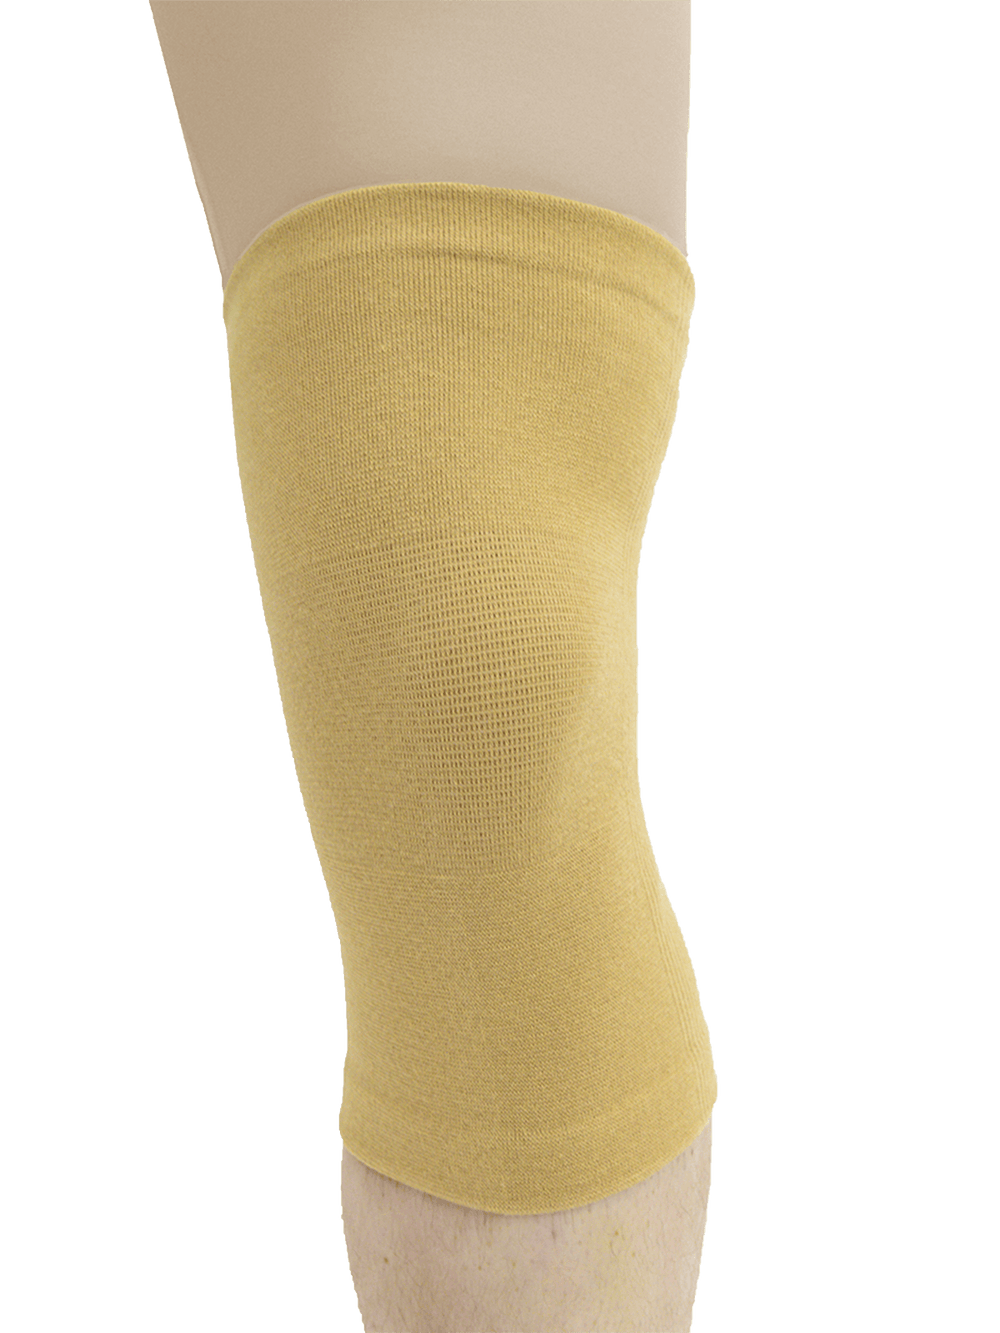 MAXAR Cotton/Elastic Knee Brace  (Four-Way Stretch) - Beige - No Insurance Medical Supplies